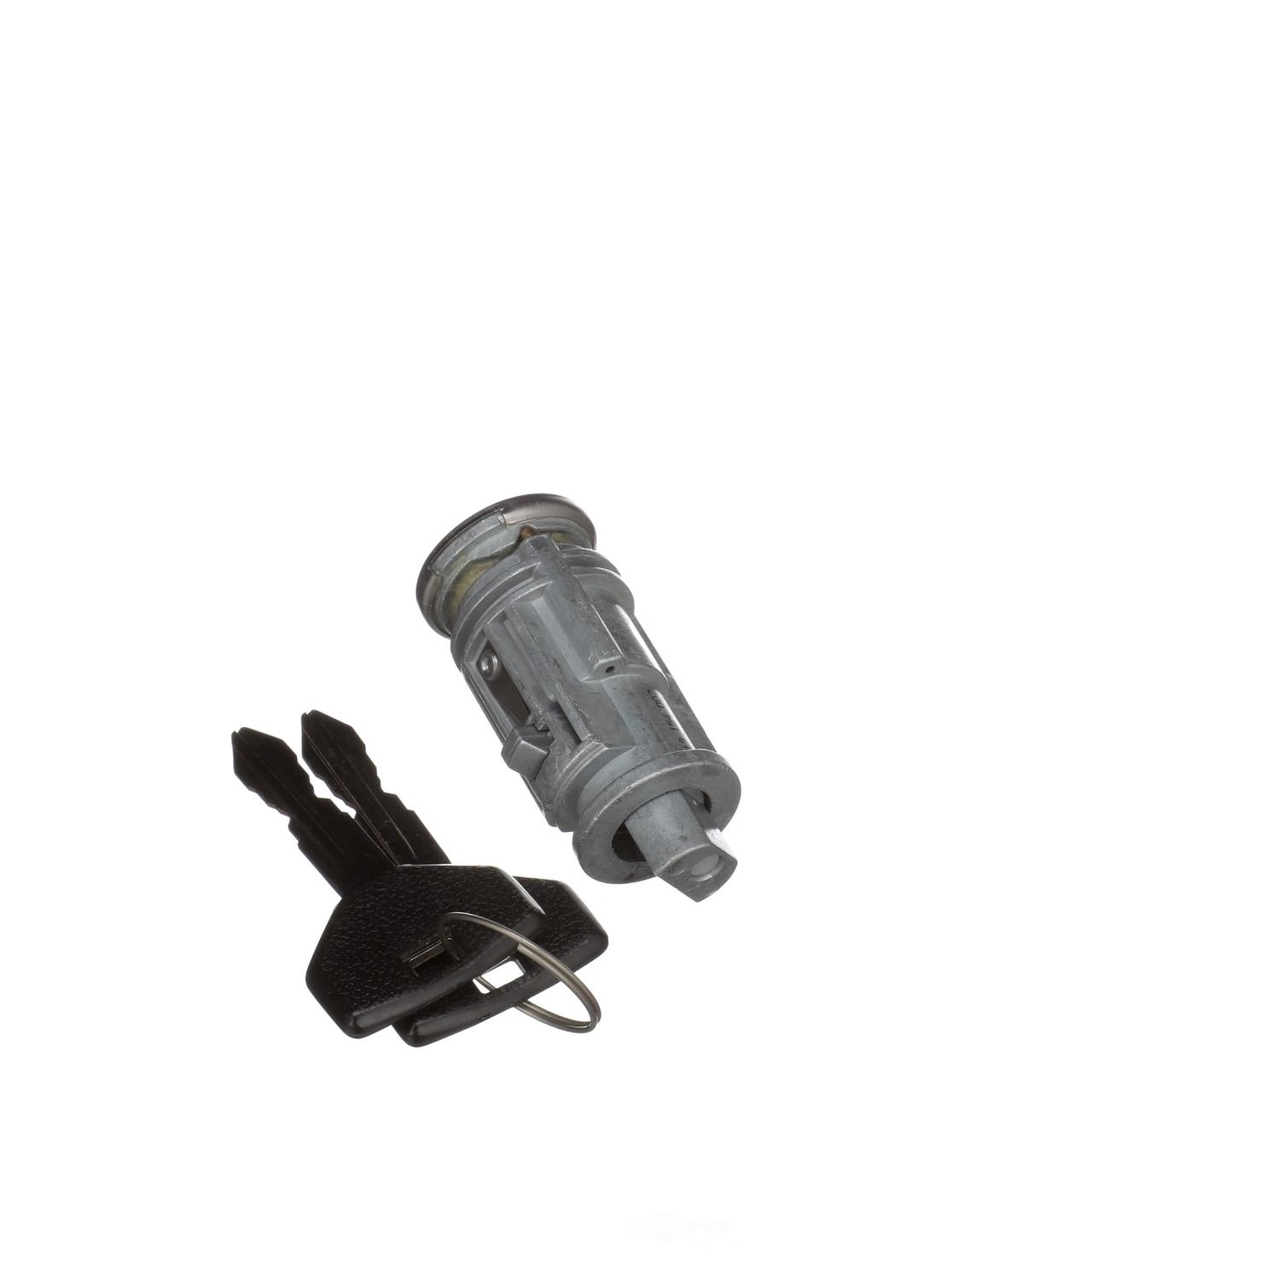 2000 Jeep Wrangler Ignition Lock Cylinder - Standard Motor Products US-427L